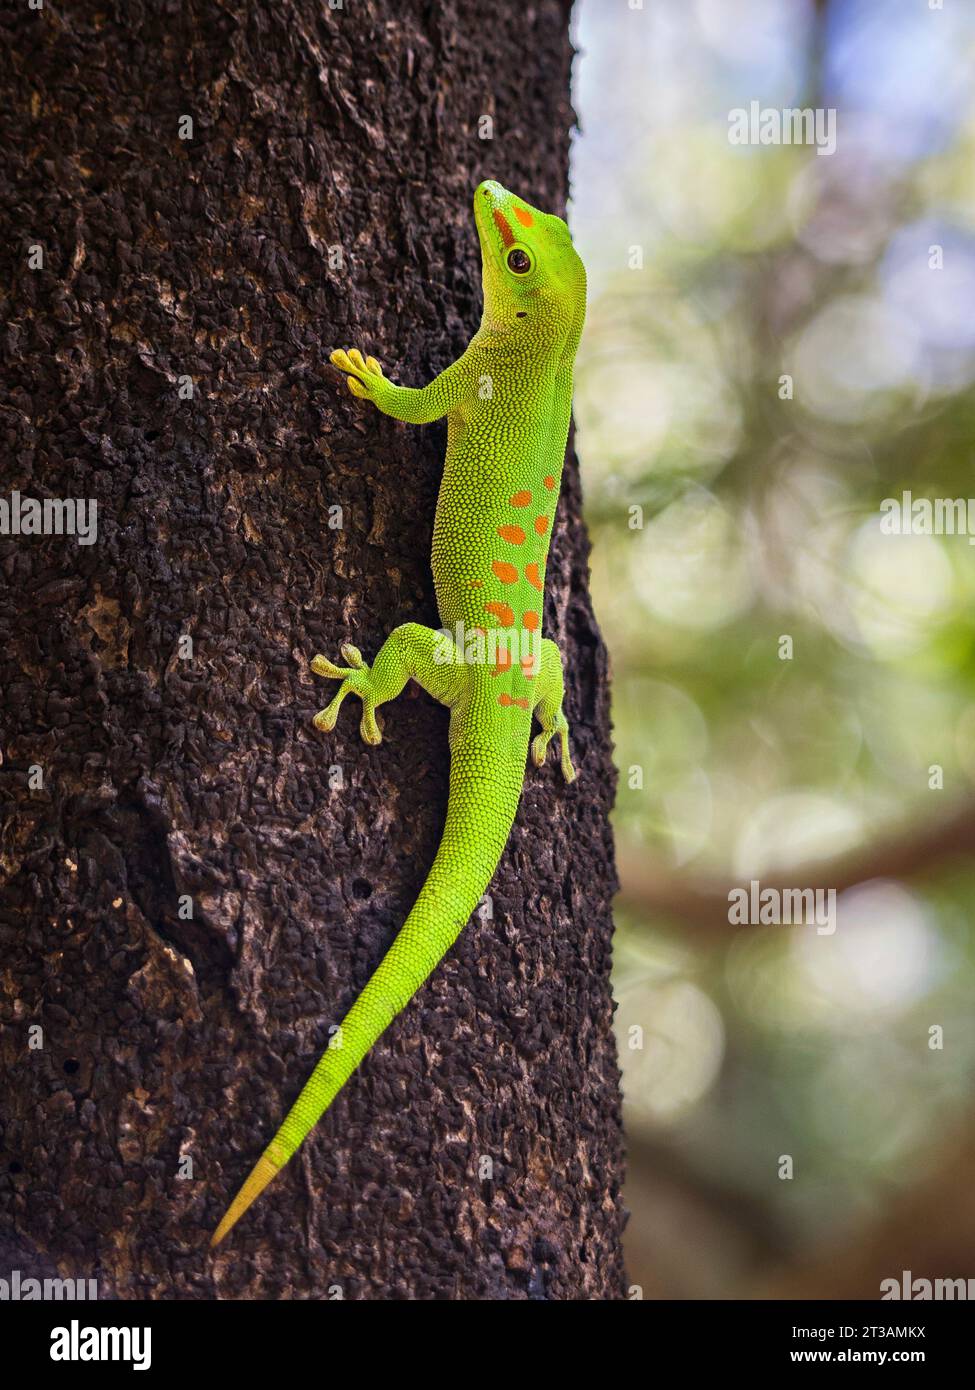 A vibrant green Madagascar Giant Day Gecko (Phelsuma grandis) sitting on a tree trunk Stock Photo